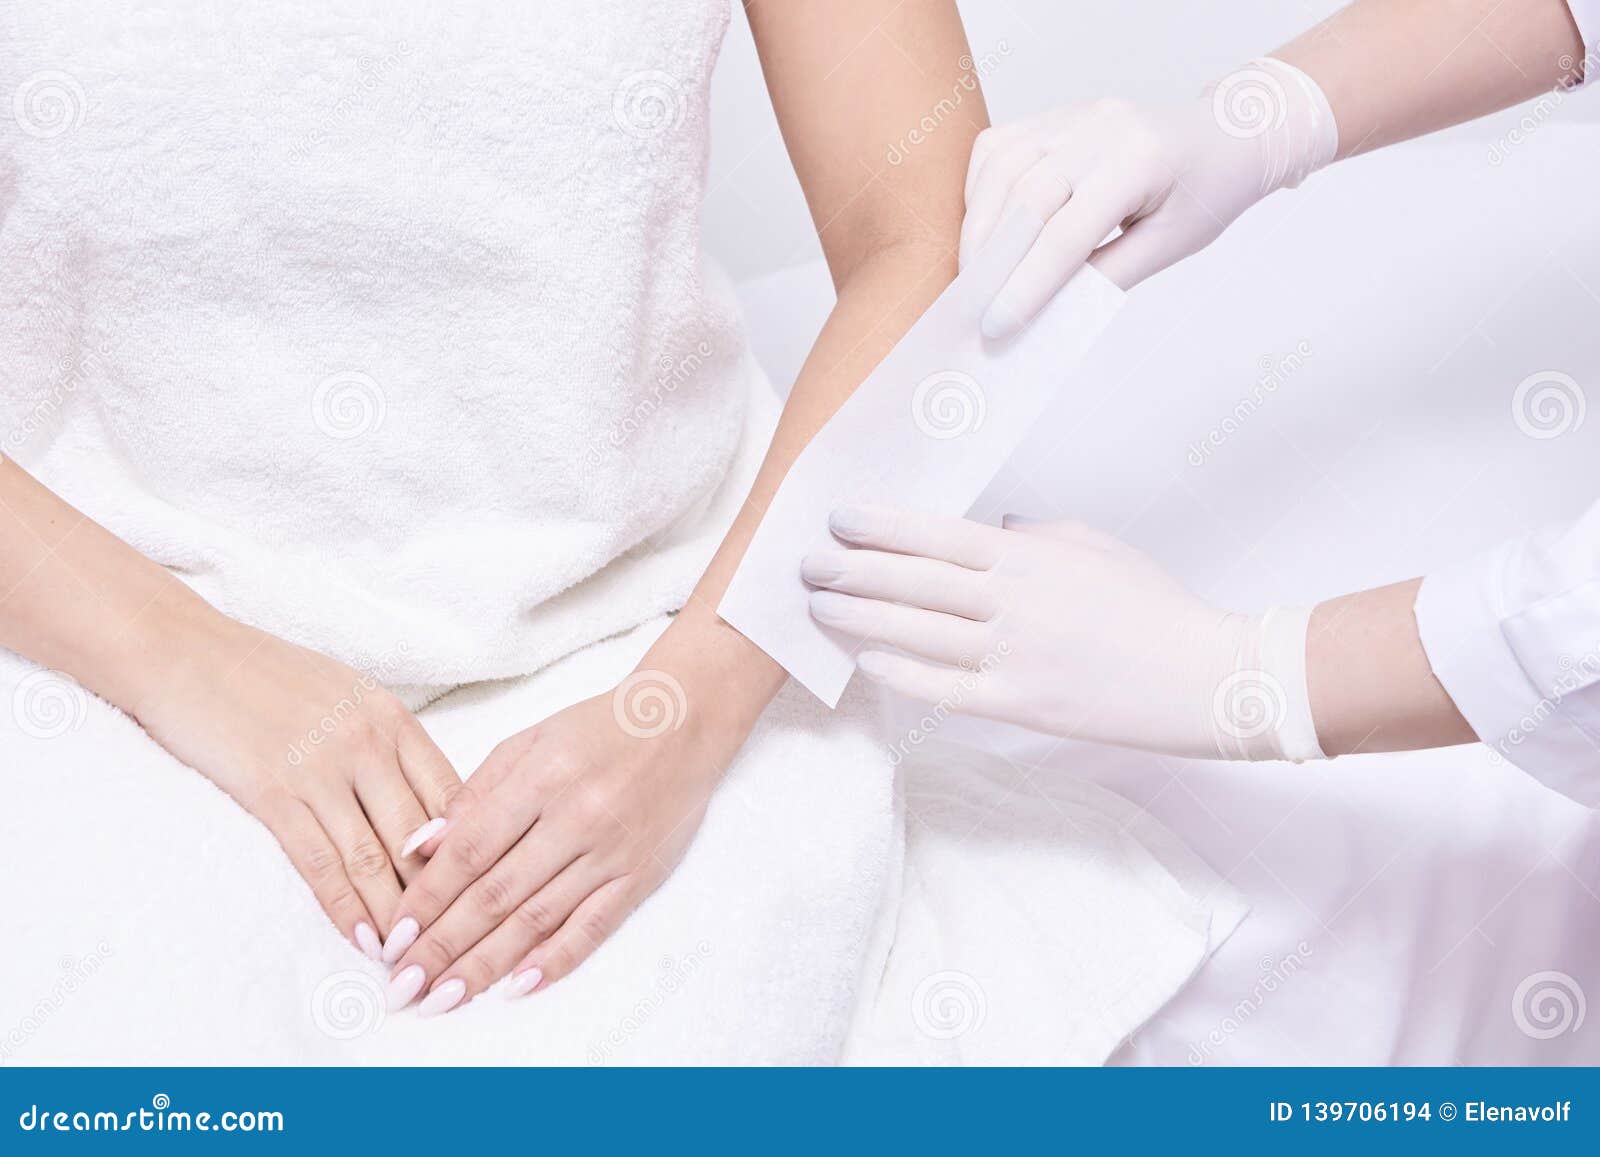 salon forearm shugaring procedure. doctor arm cosmetology salon